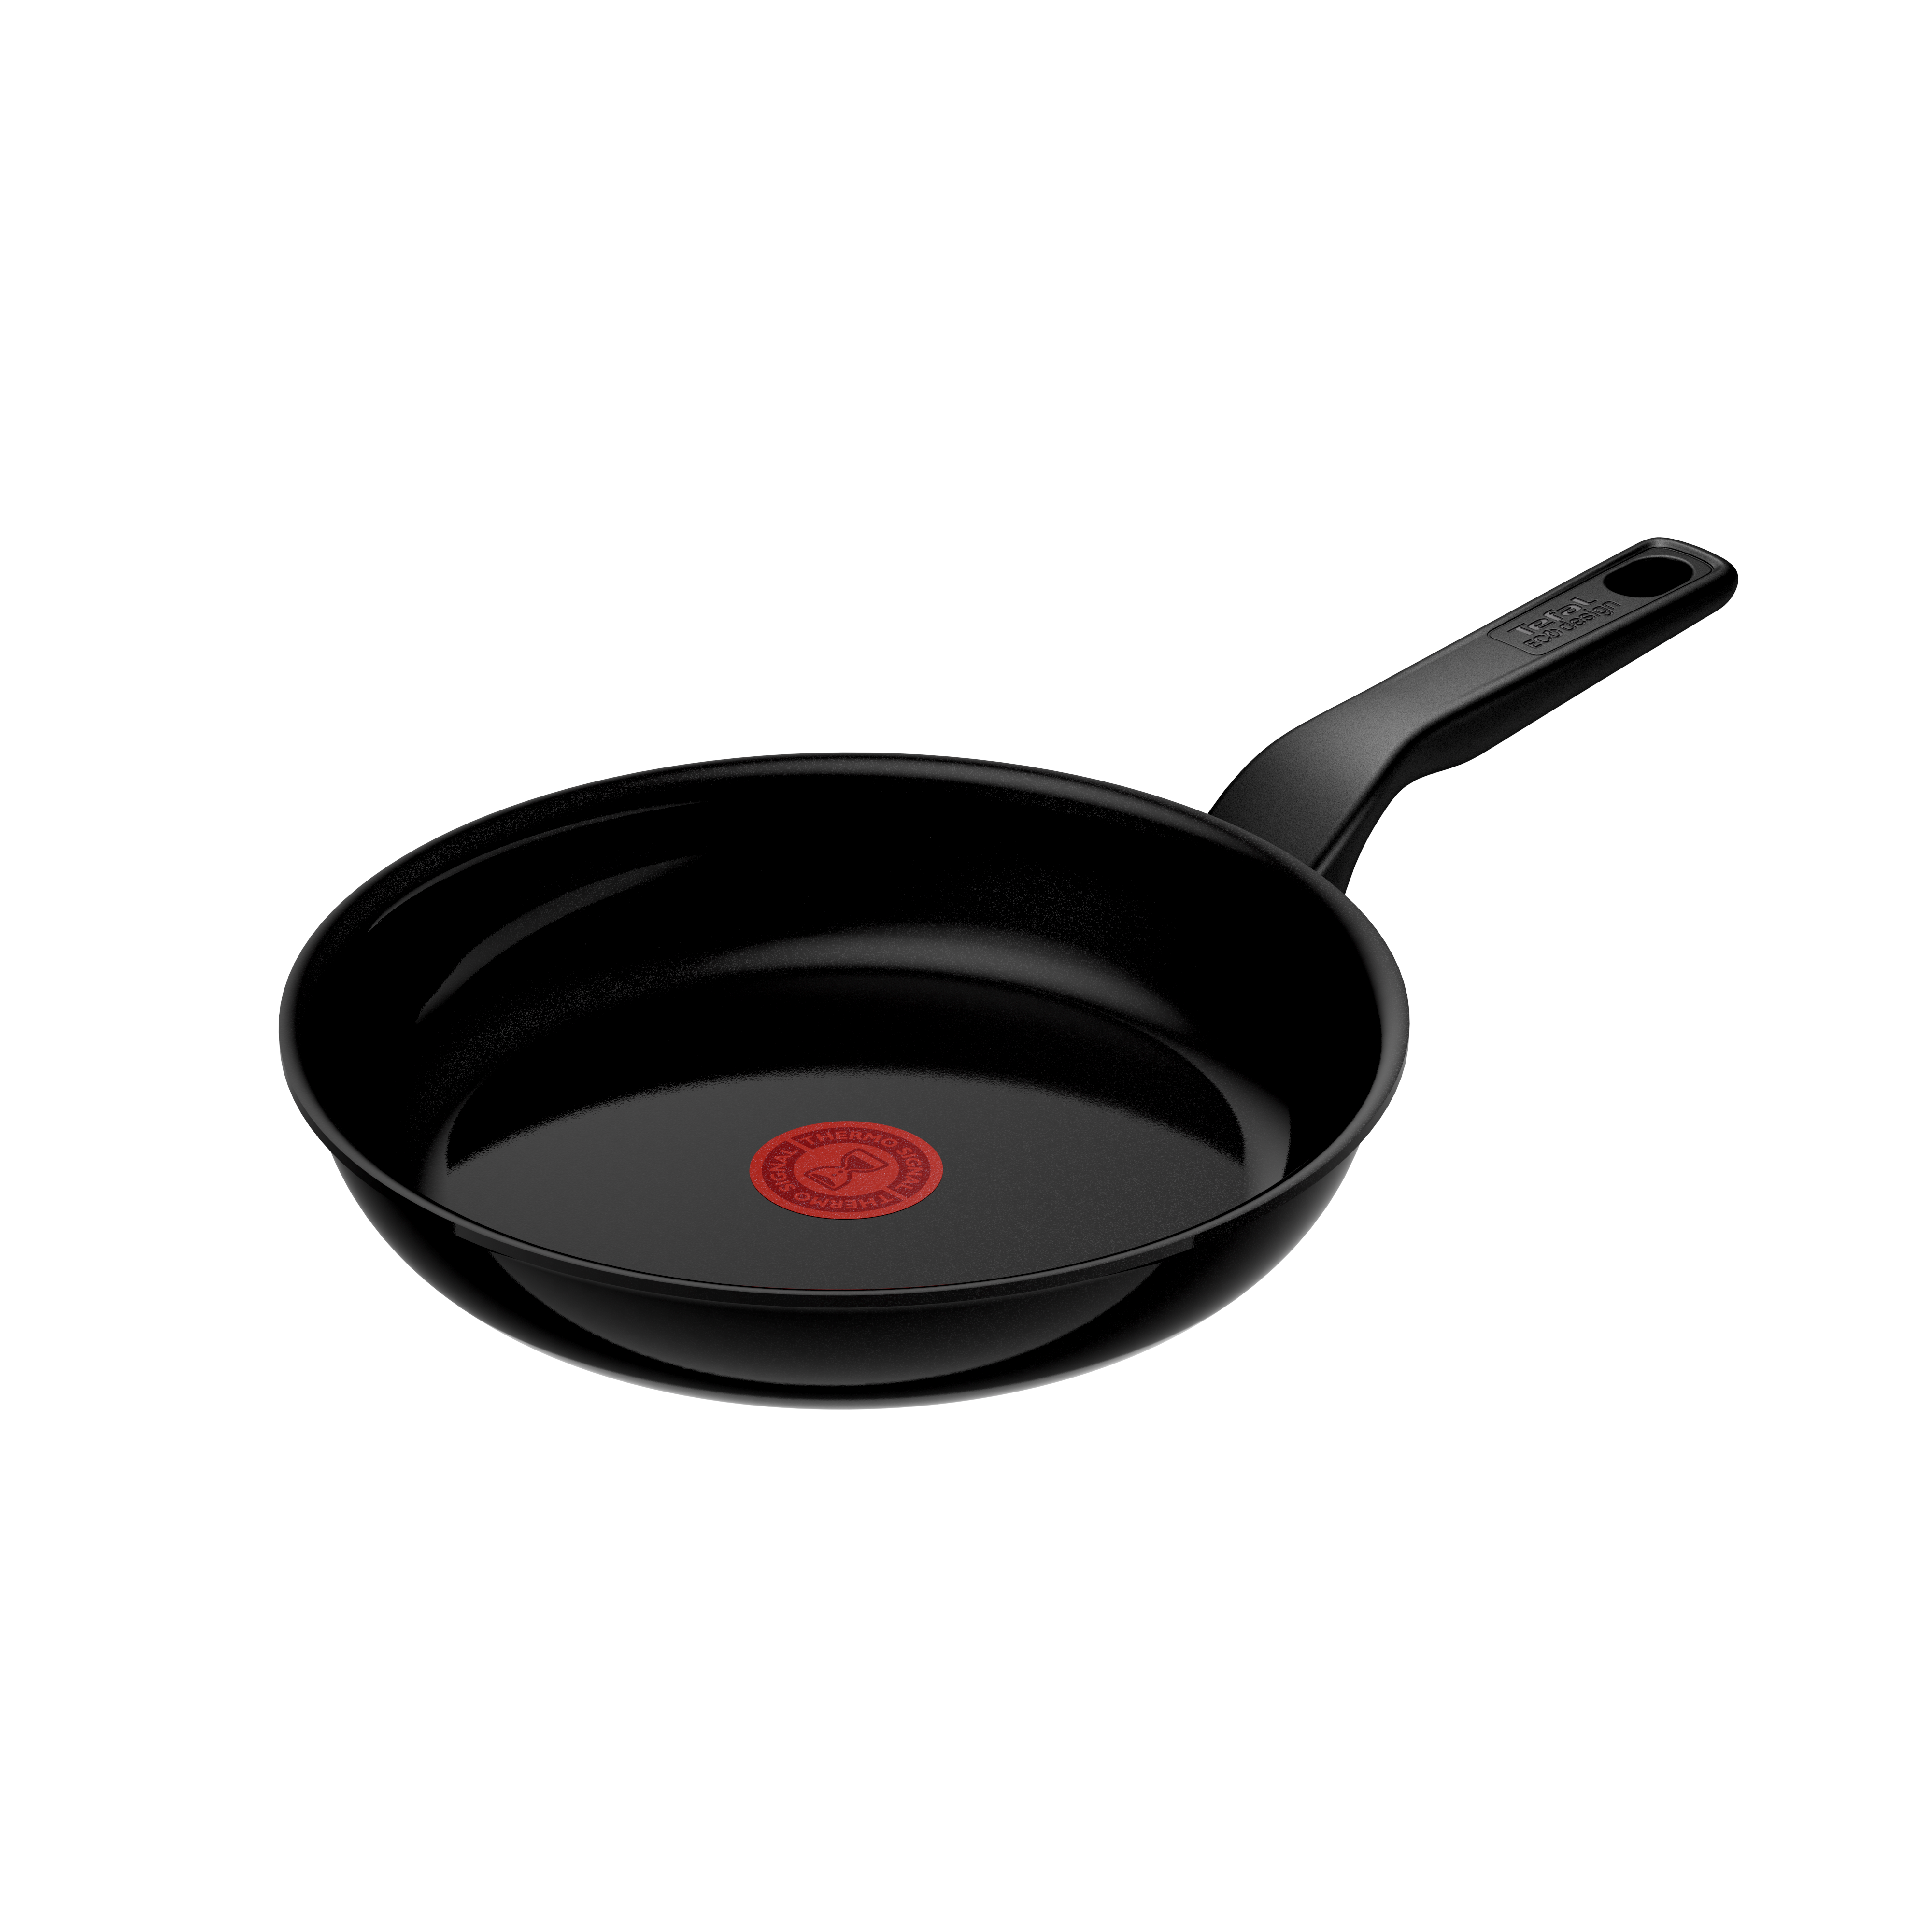 Tefal Renew Black Frypan 24cm - C4320423 - Ceramic Non-Stick Coating